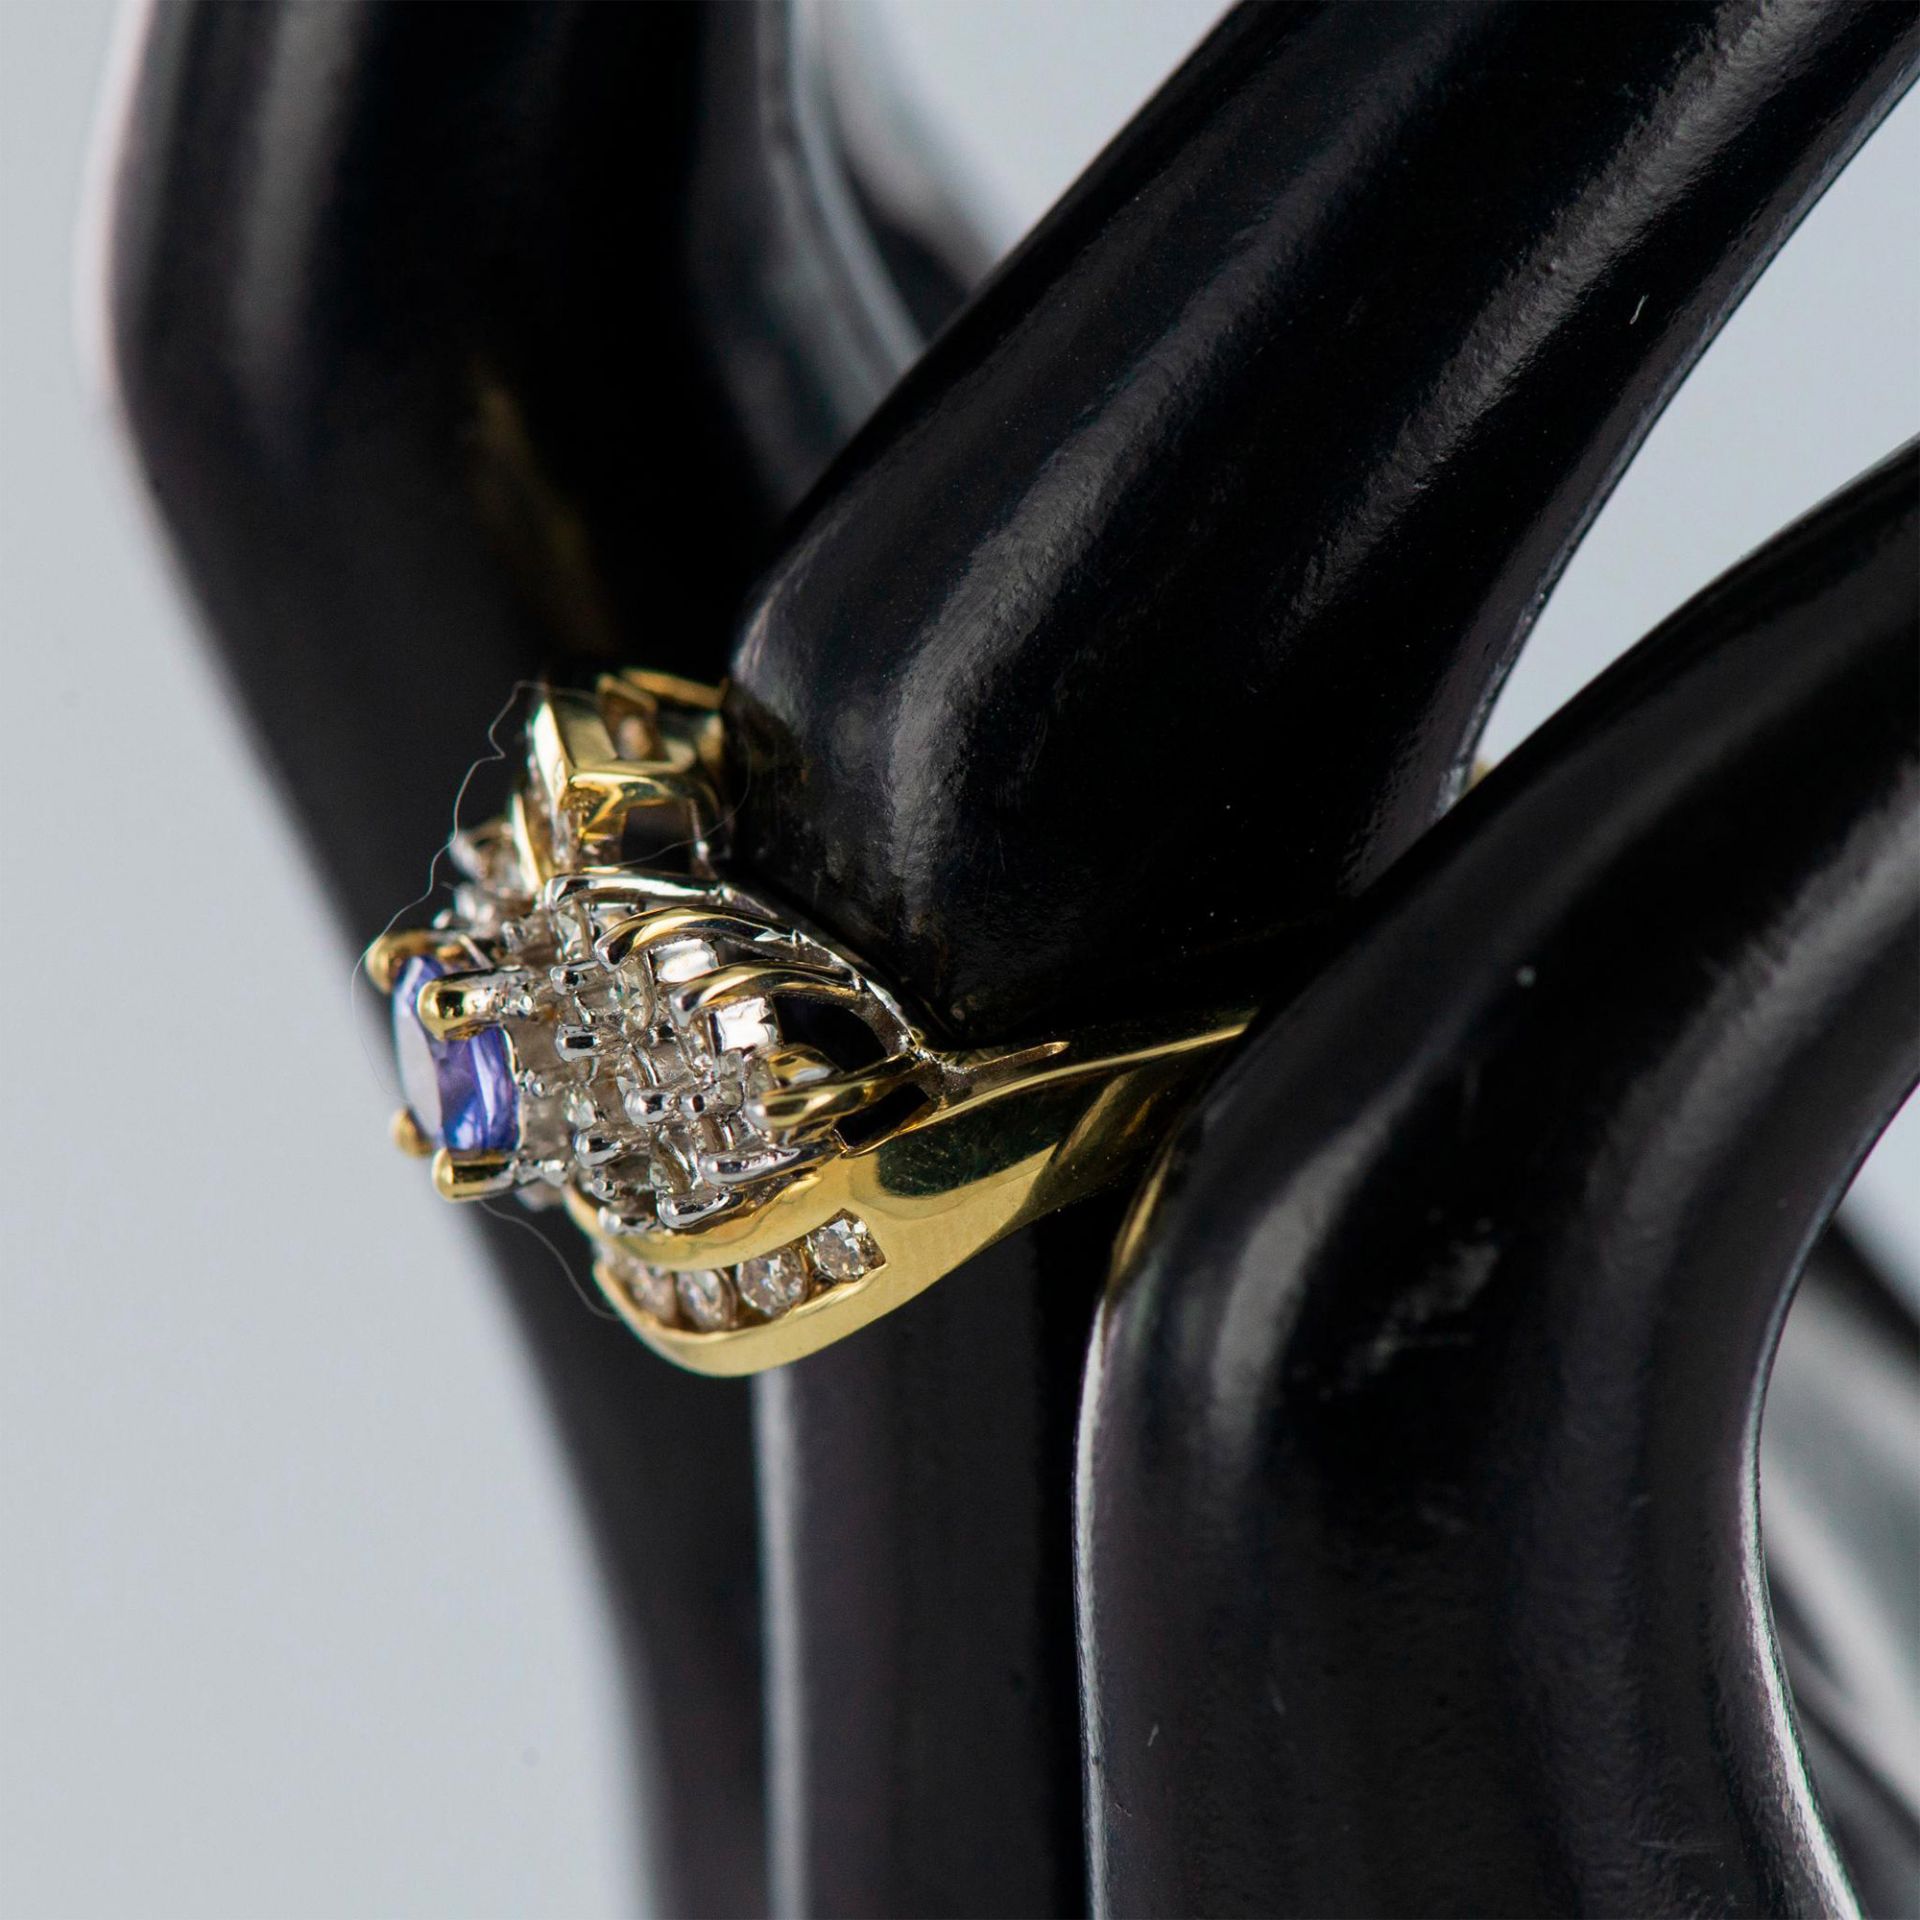 Stunning LeVian 14K Yellow Gold, Diamond, and Amethyst Ring - Image 8 of 10